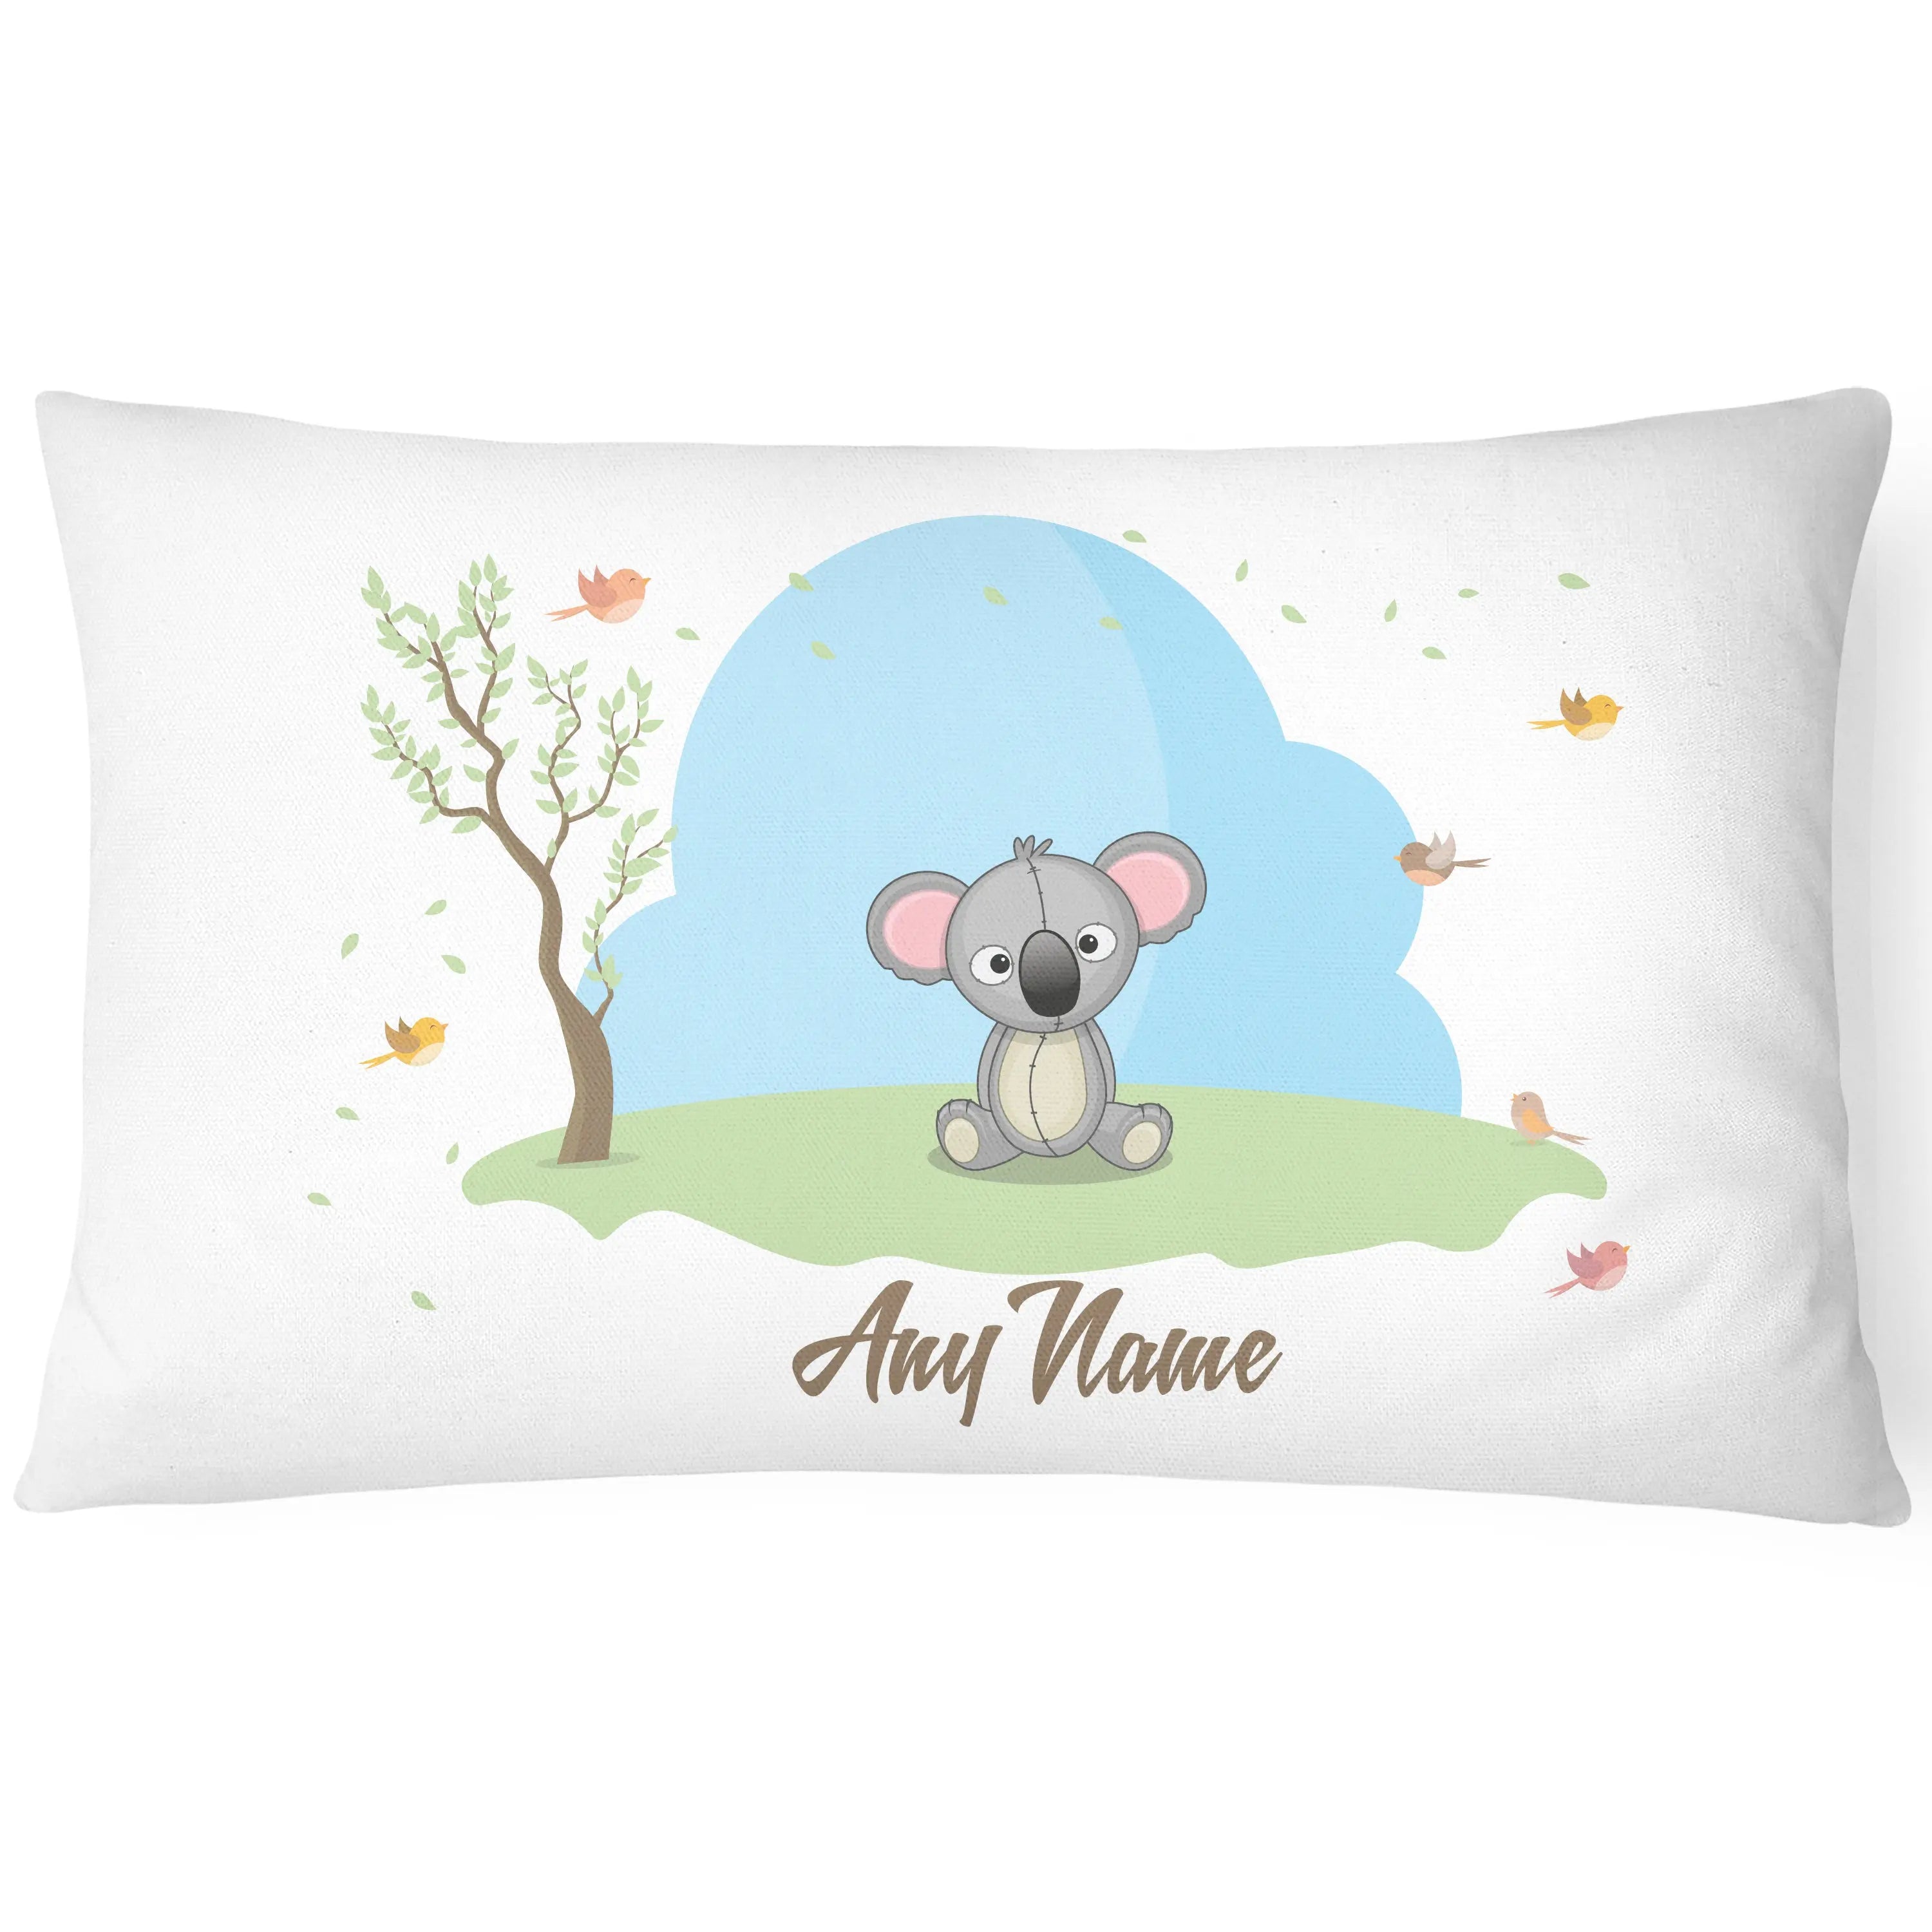 Personalised Children's Pillowcase Cute Animal - Lovely - CushionPop